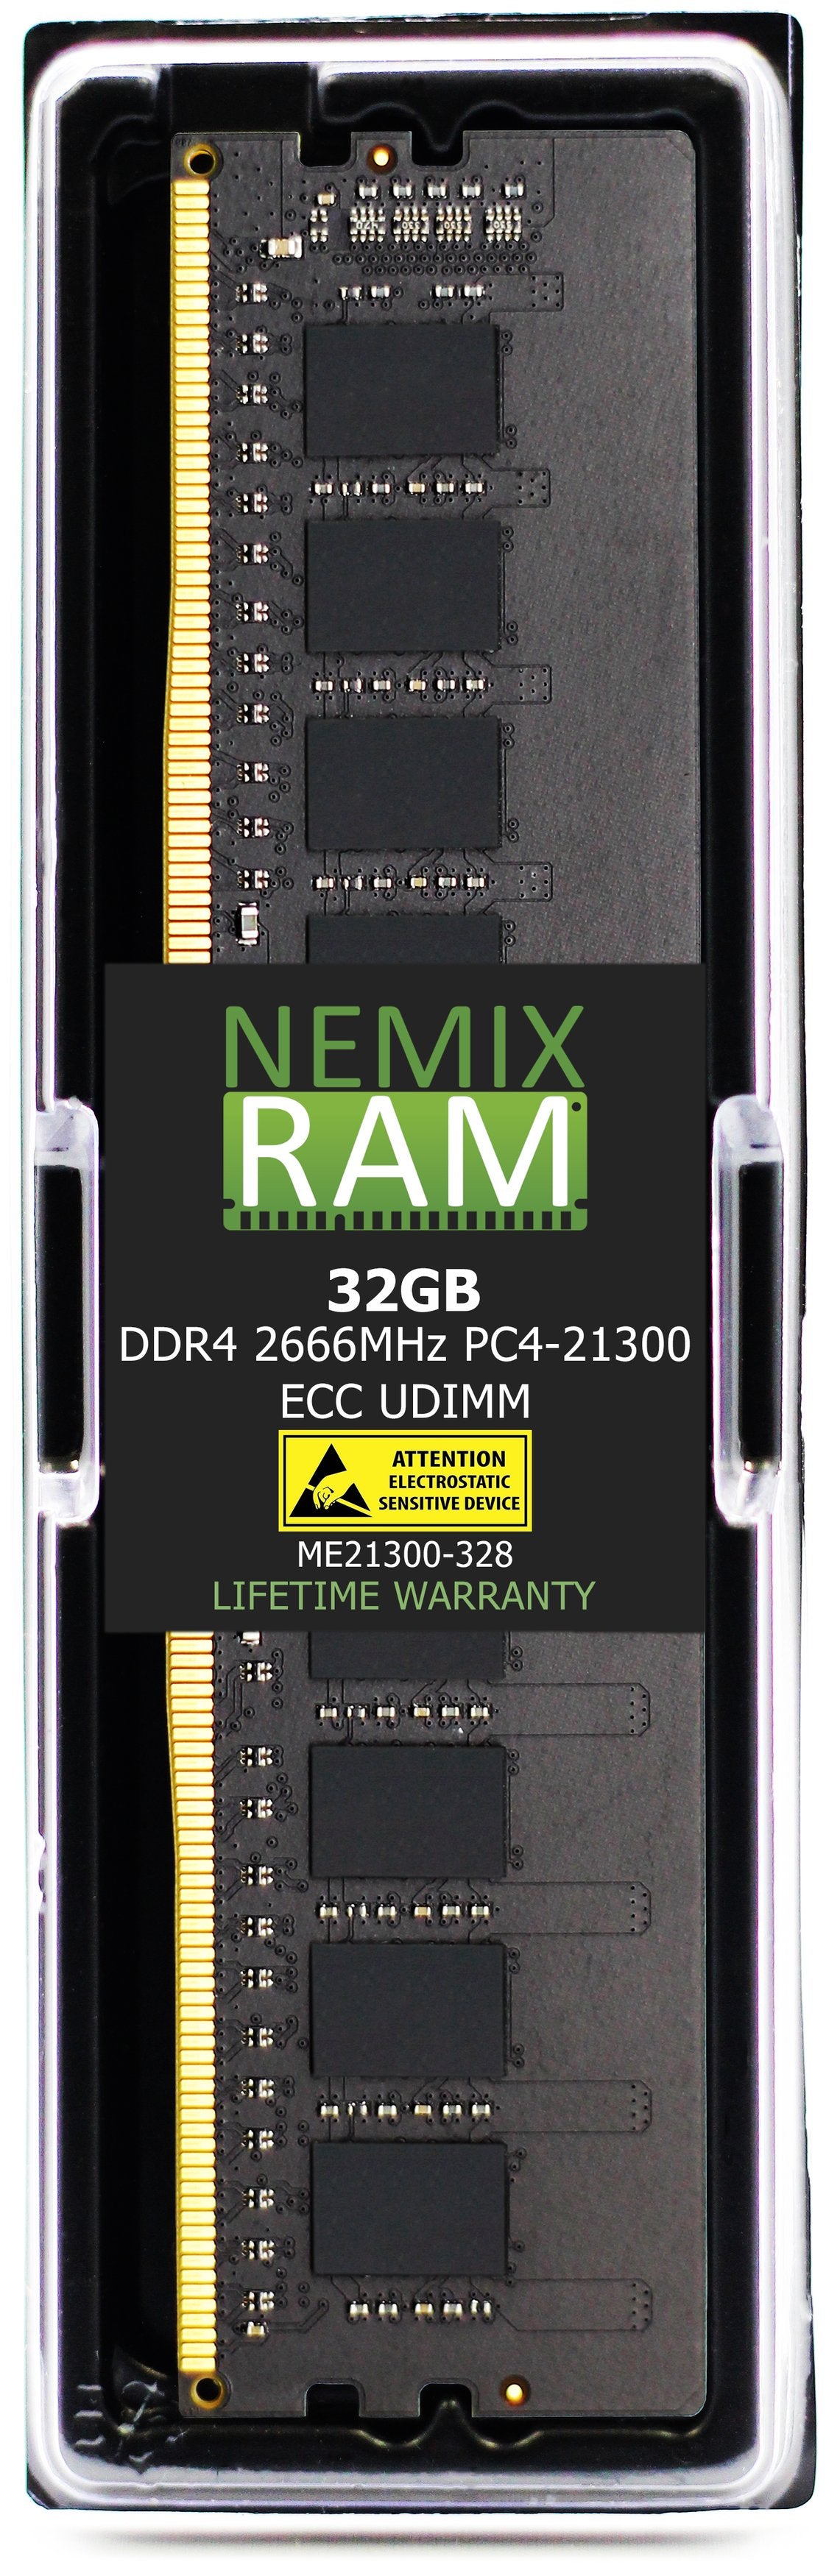 32GB DDR4 2666MHZ PC4-21300 ECC UDIMM Compatible with Supermicro MEM-DR432L-CV02-EU26